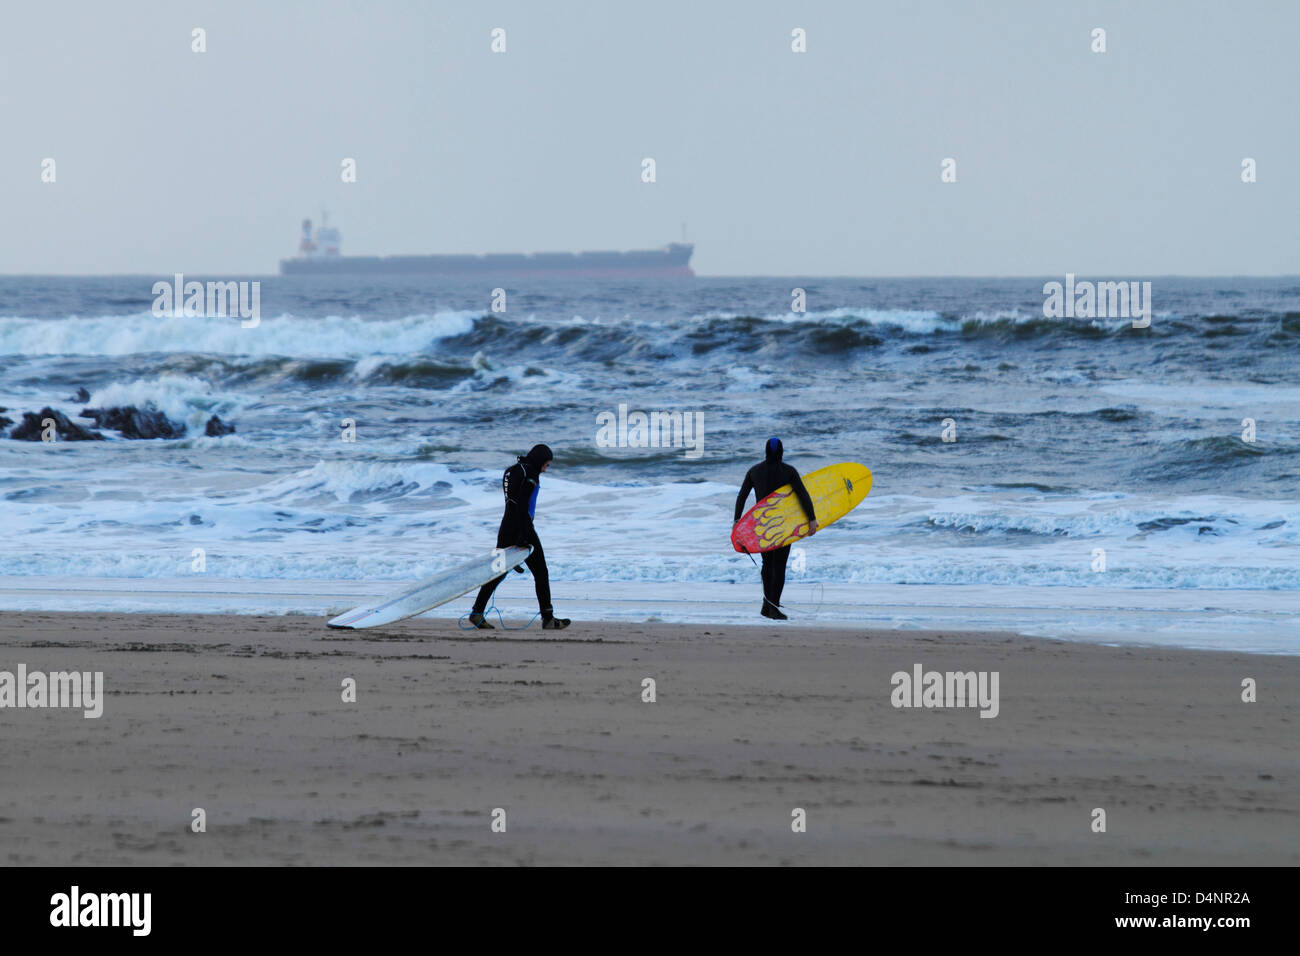 Winter surfing in the Atlantic ocean off Ballybunion beach on Ireland's west coast, County Kerry, Republic of Ireland Stock Photo